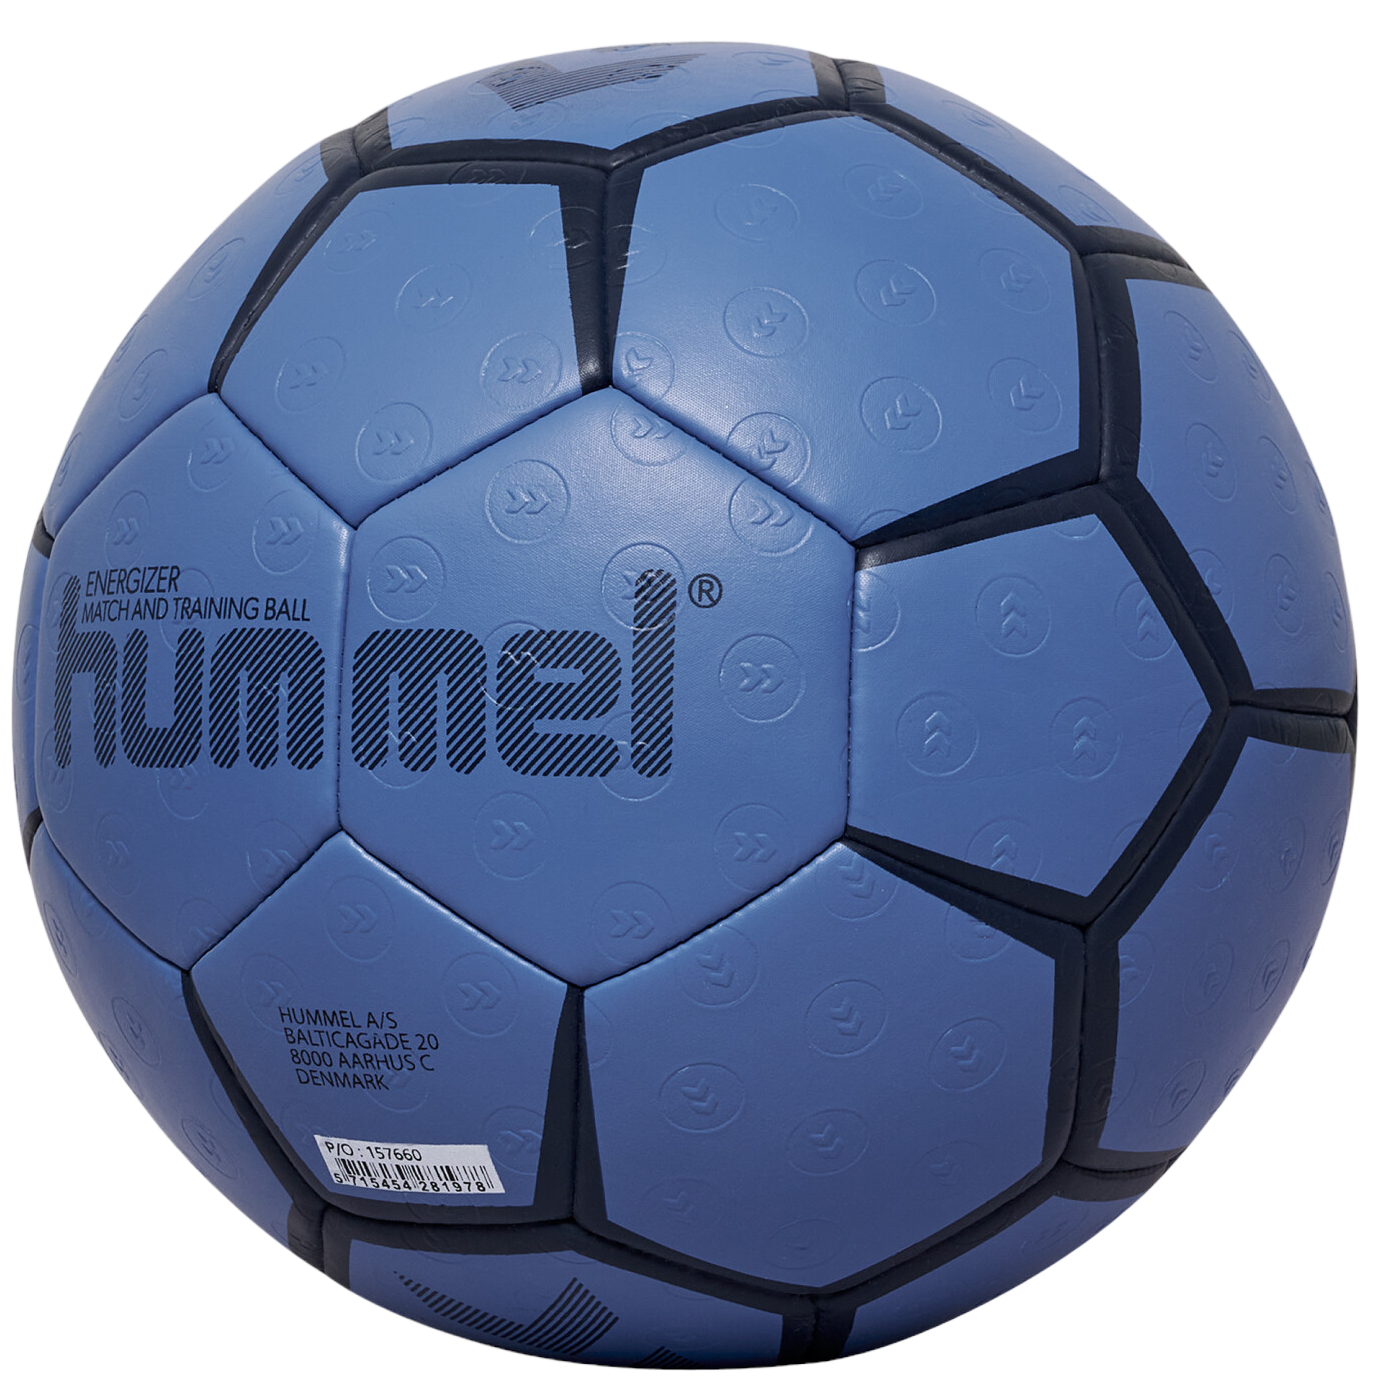 Házenkářský míč Hummel Action Energizer HB